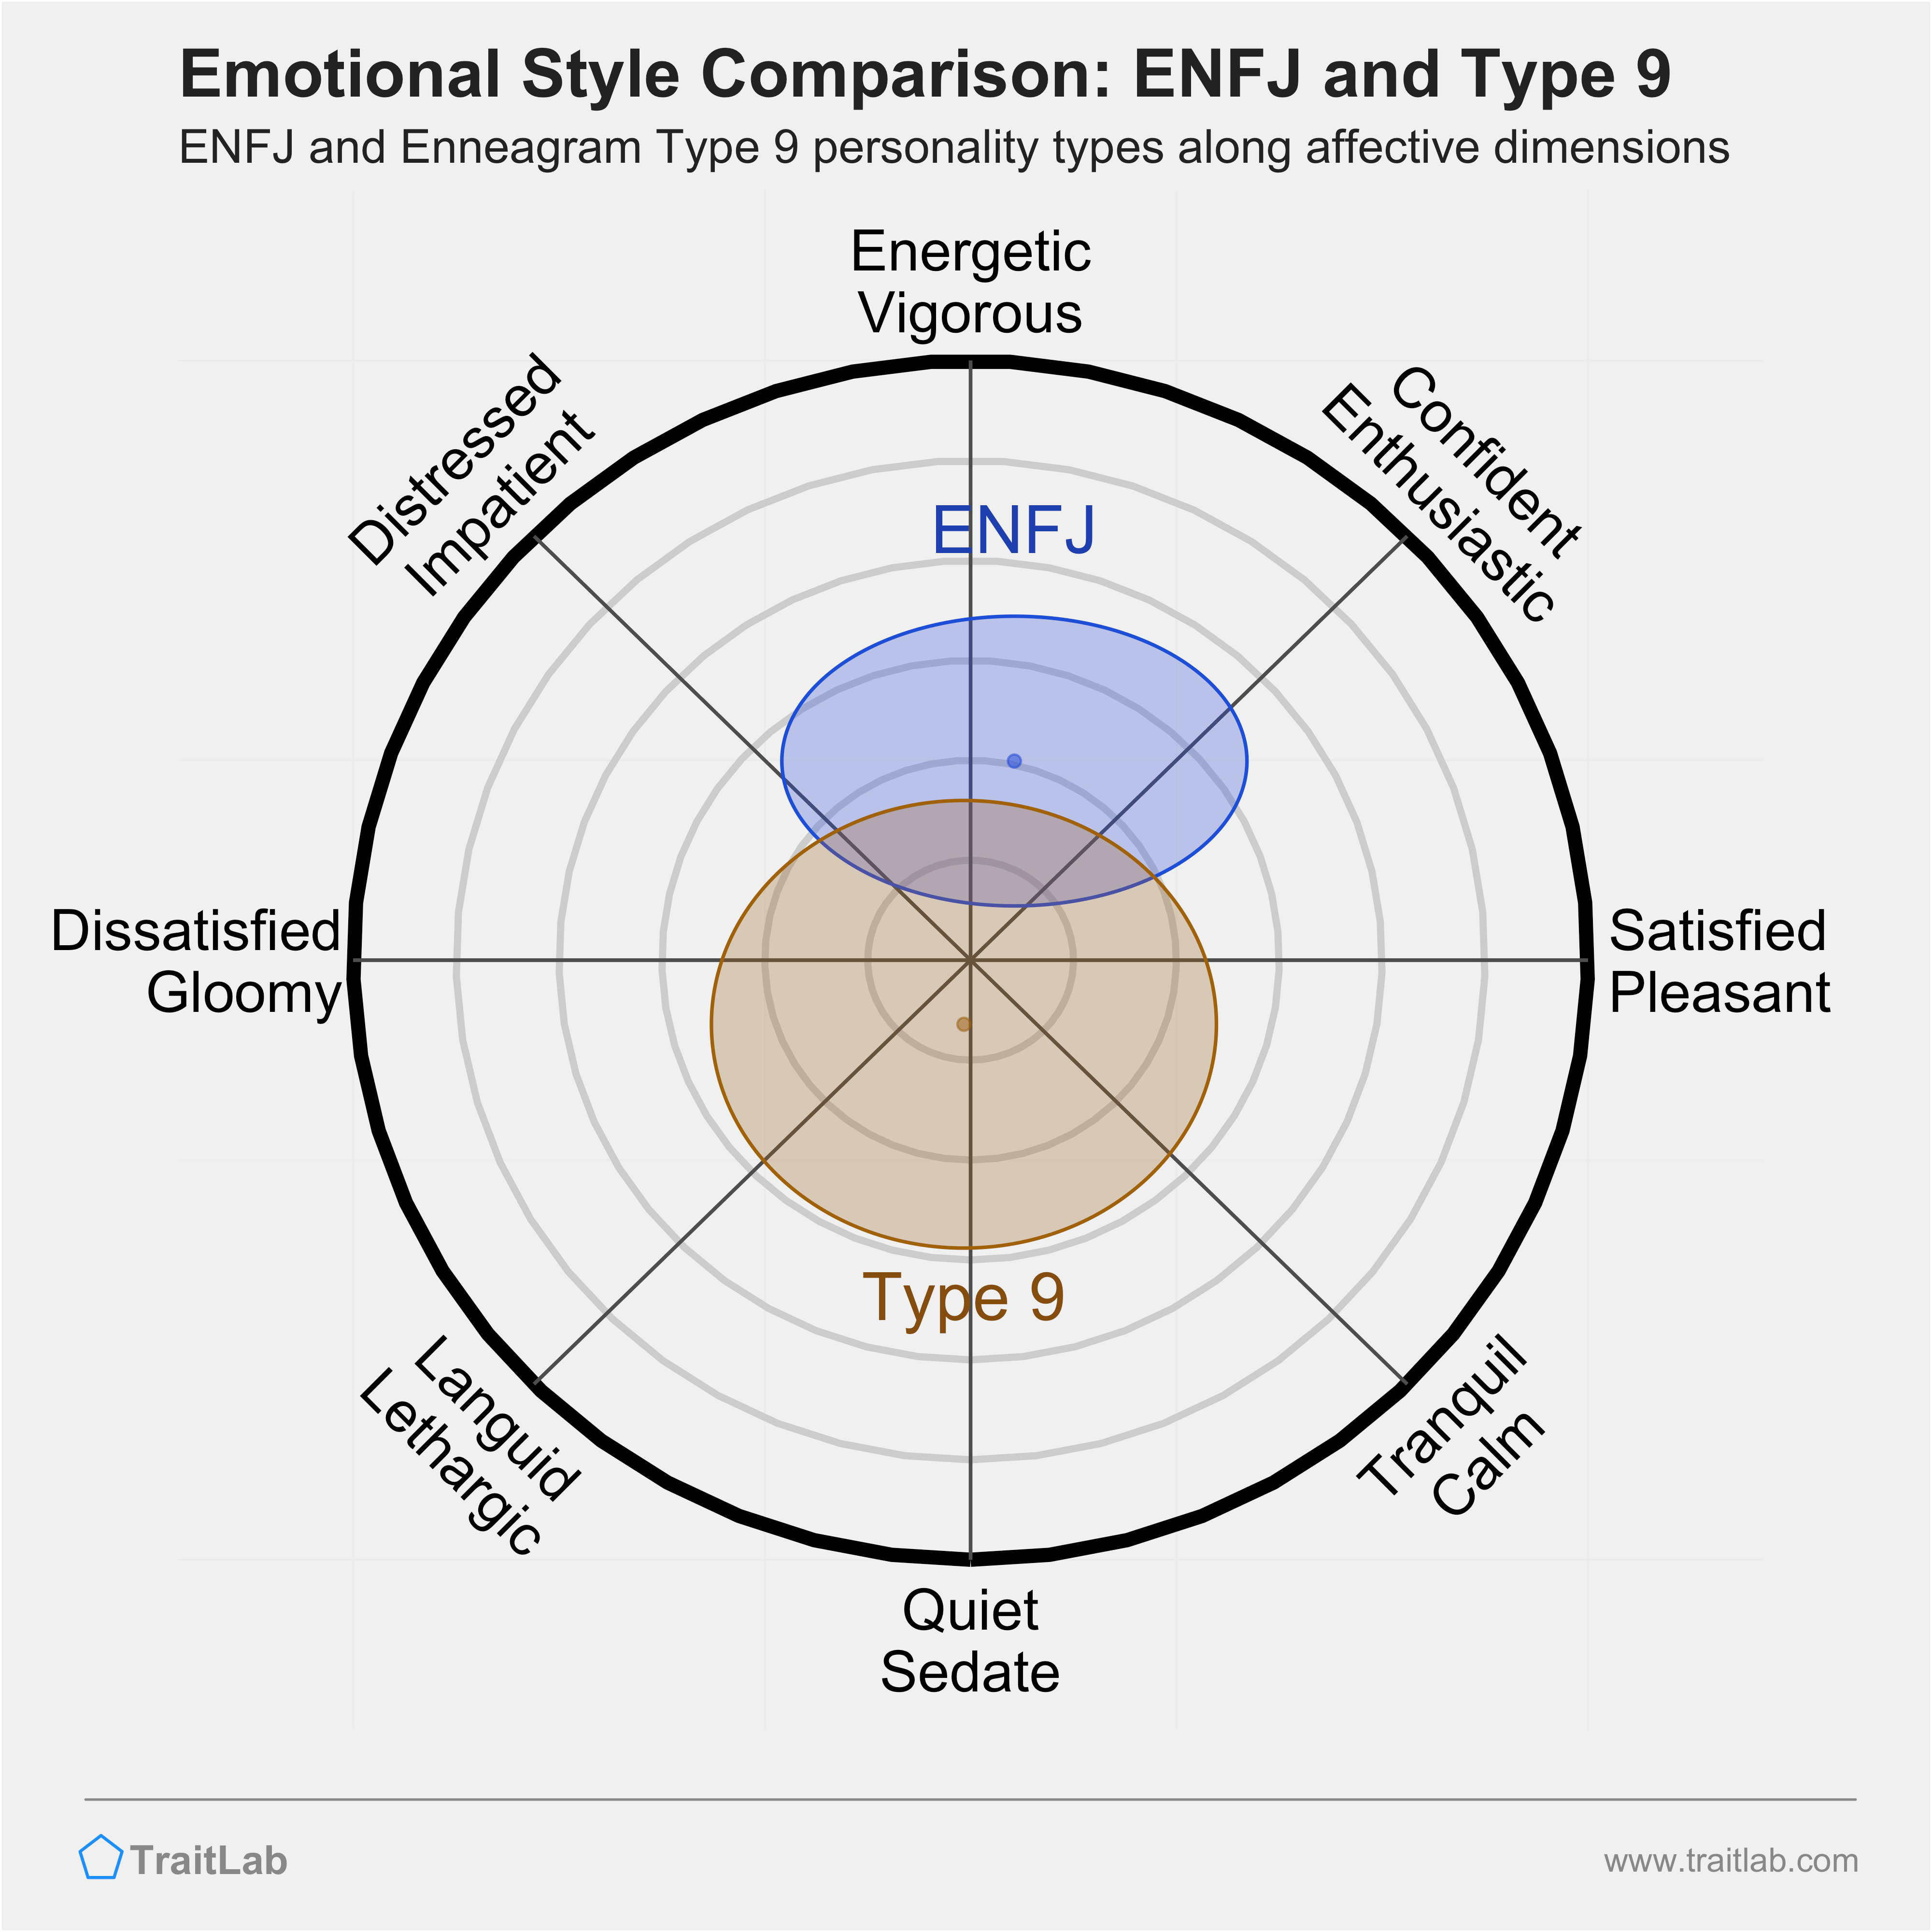 ENFJ and Type 9 comparison across emotional (affective) dimensions